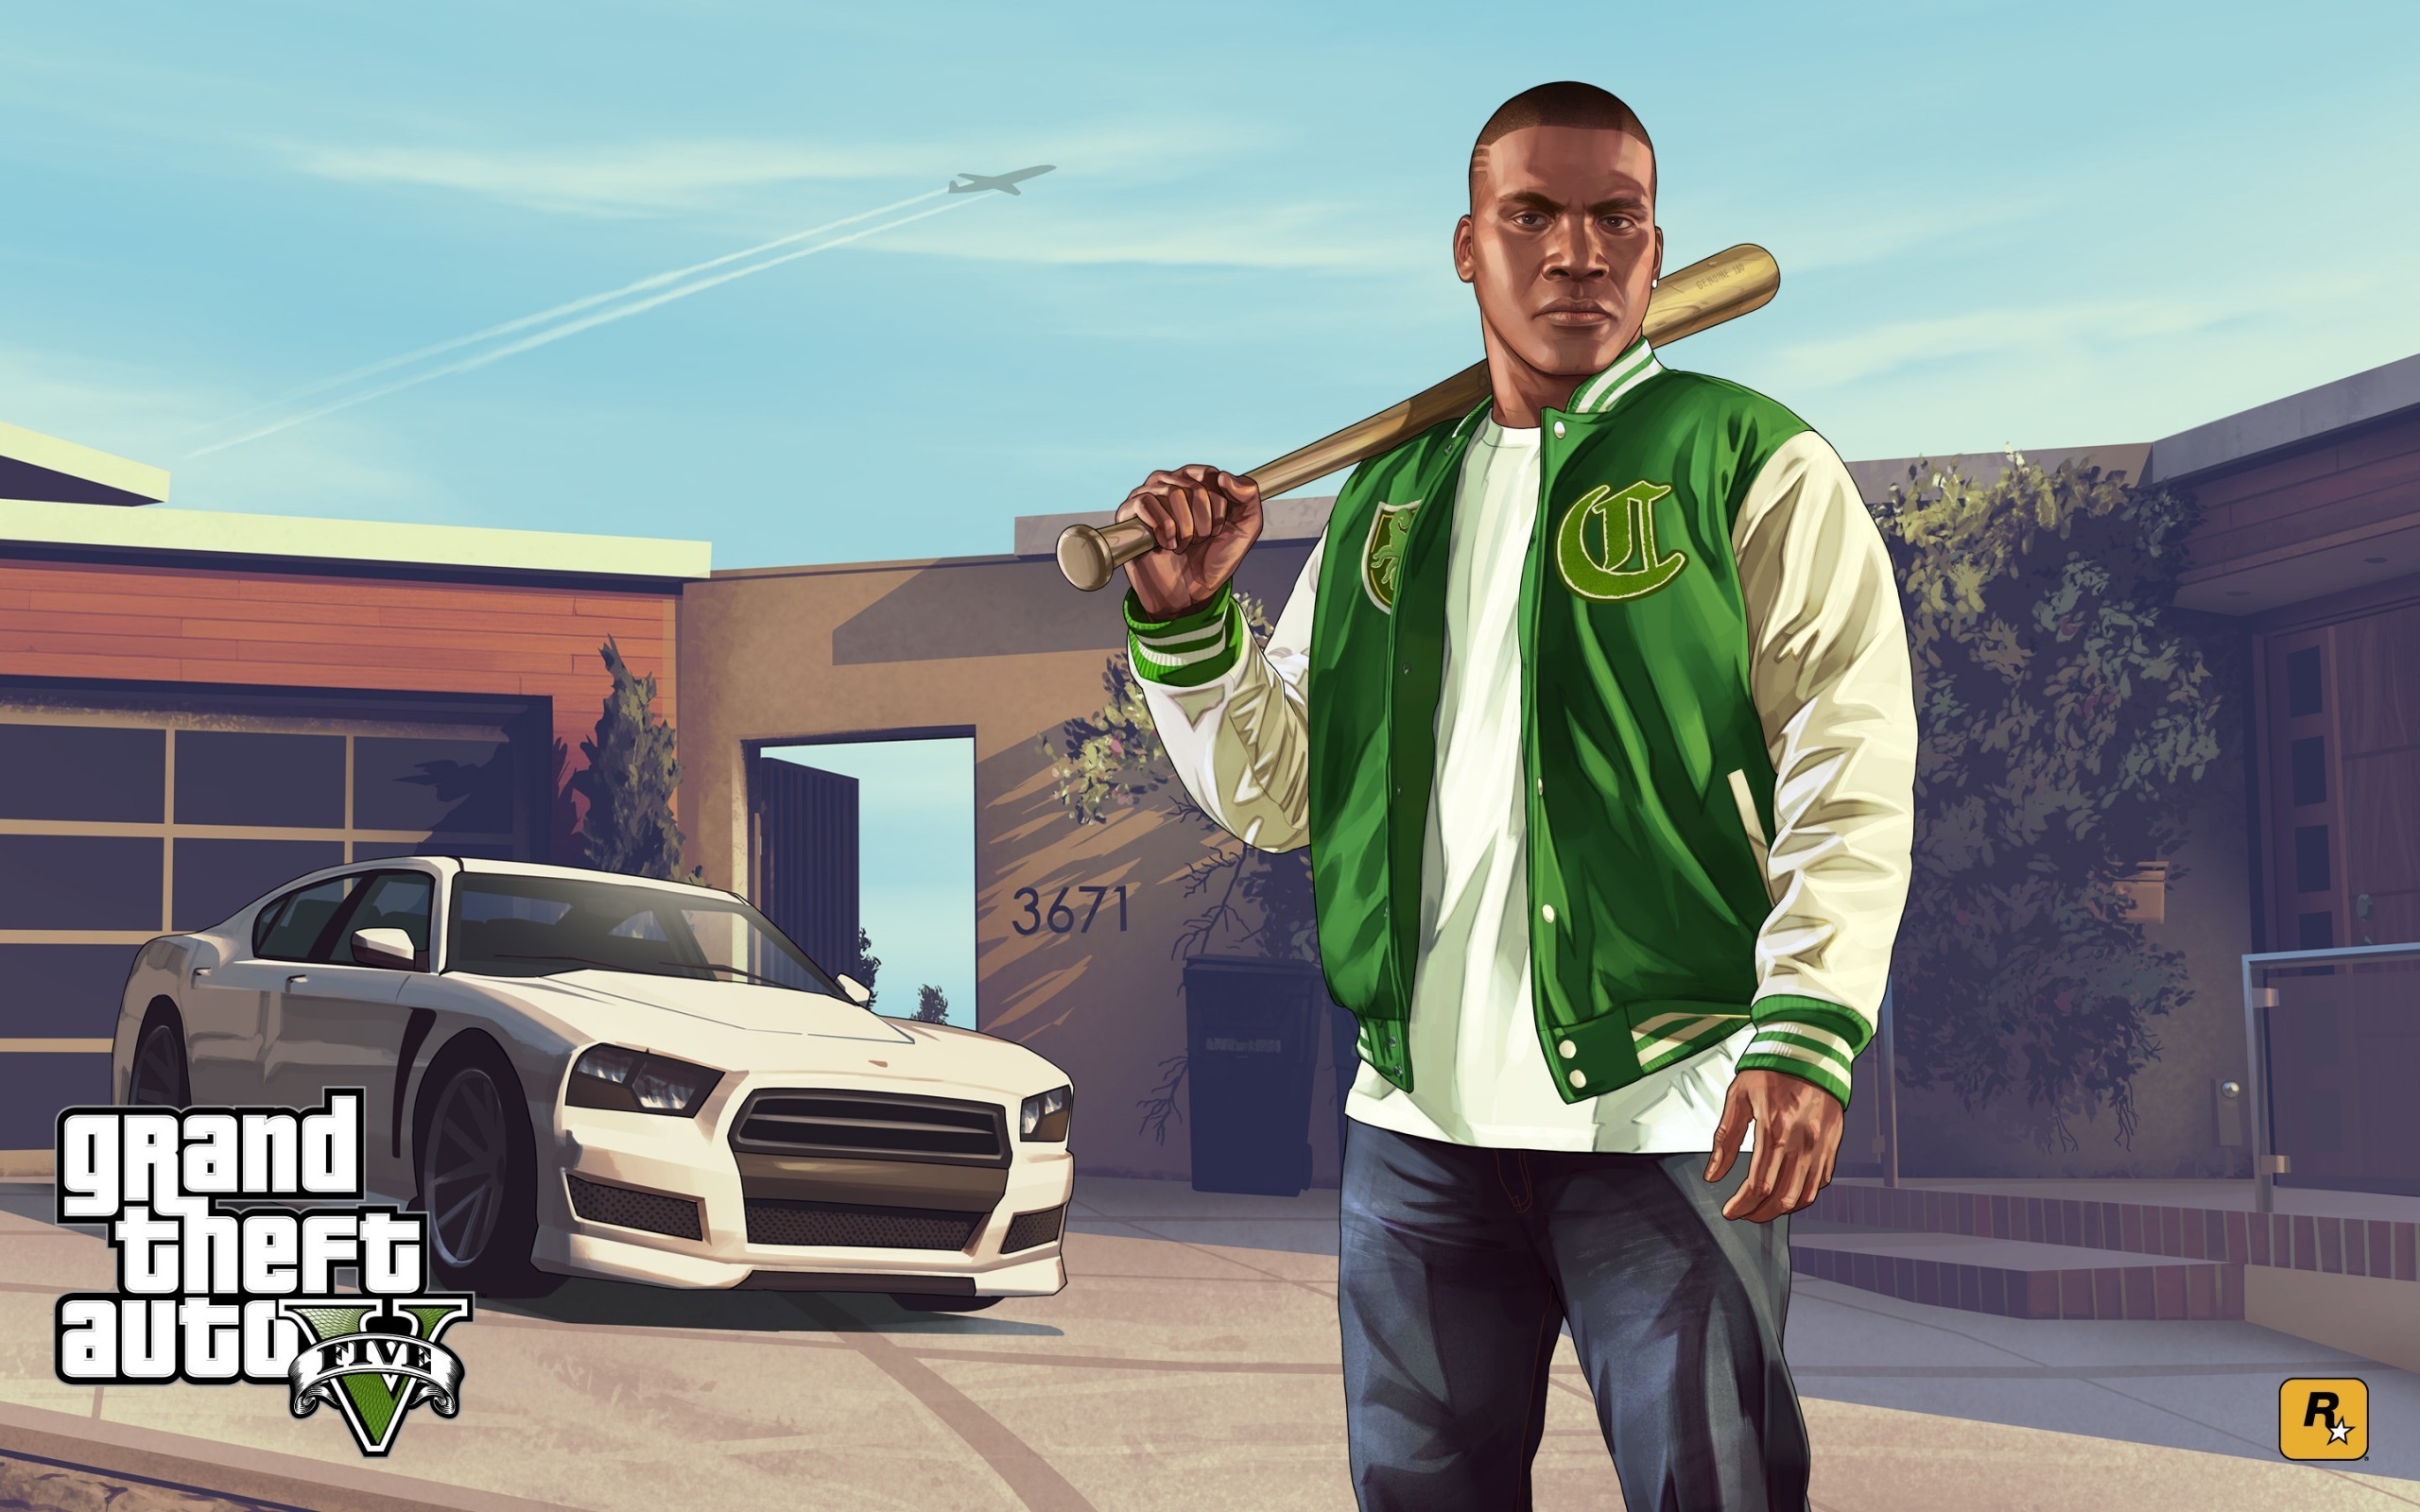 Grand Theft Auto V for 2560 x 1600 widescreen resolution